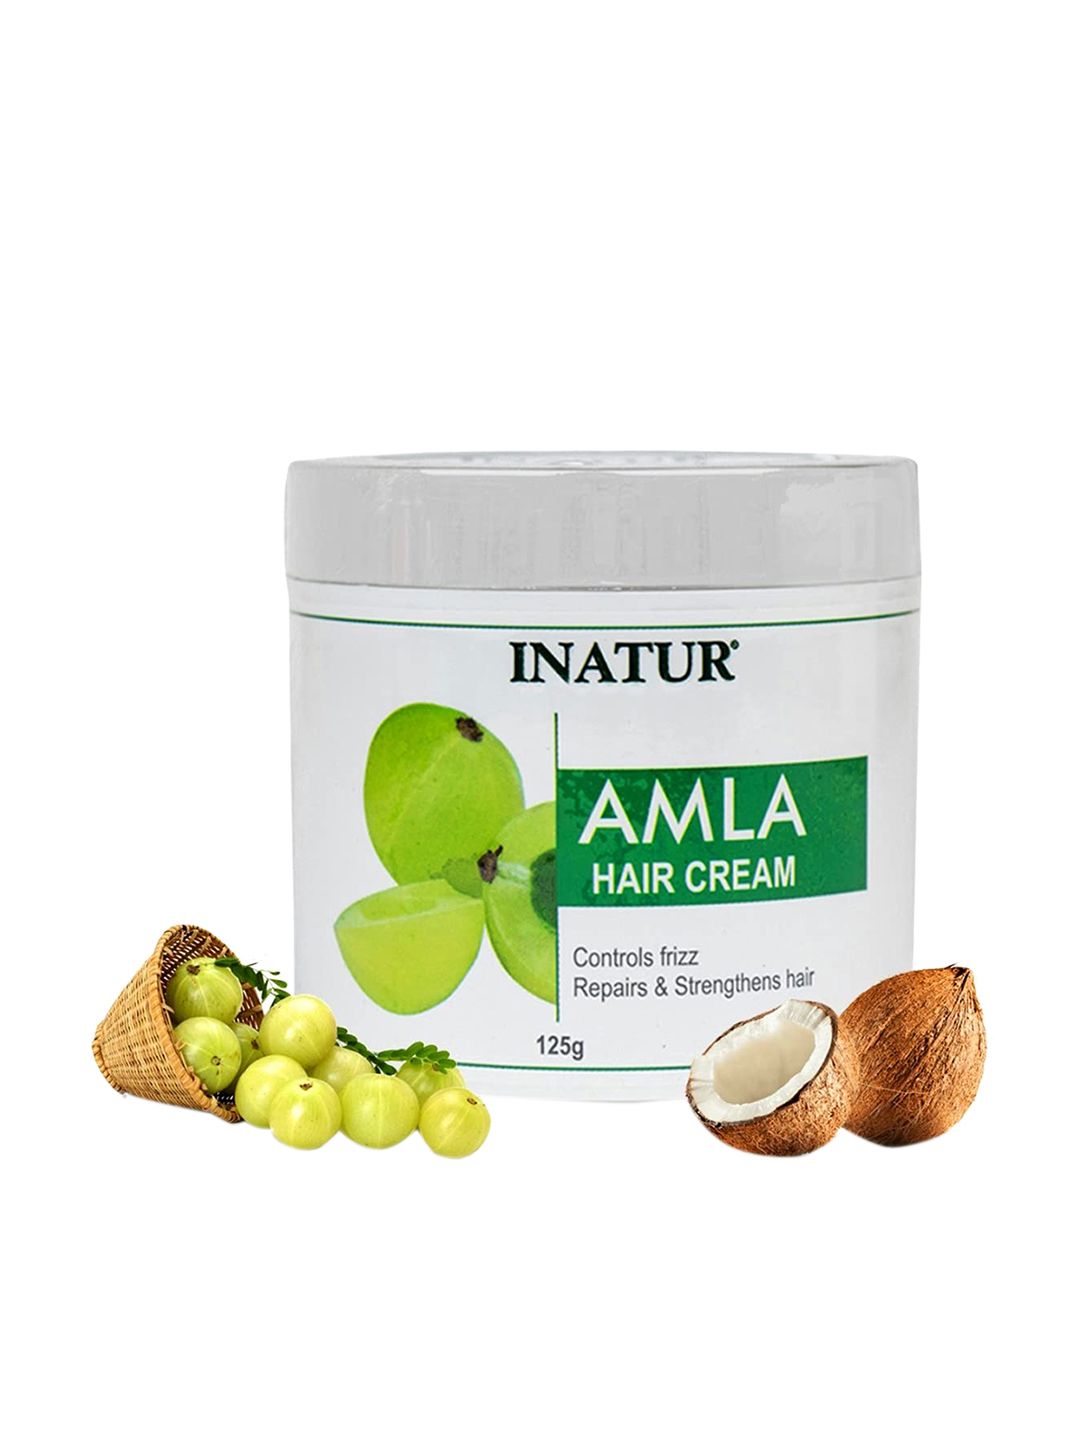 Inatur Amla Hair Cream Controls Frizz 125 g Price in India